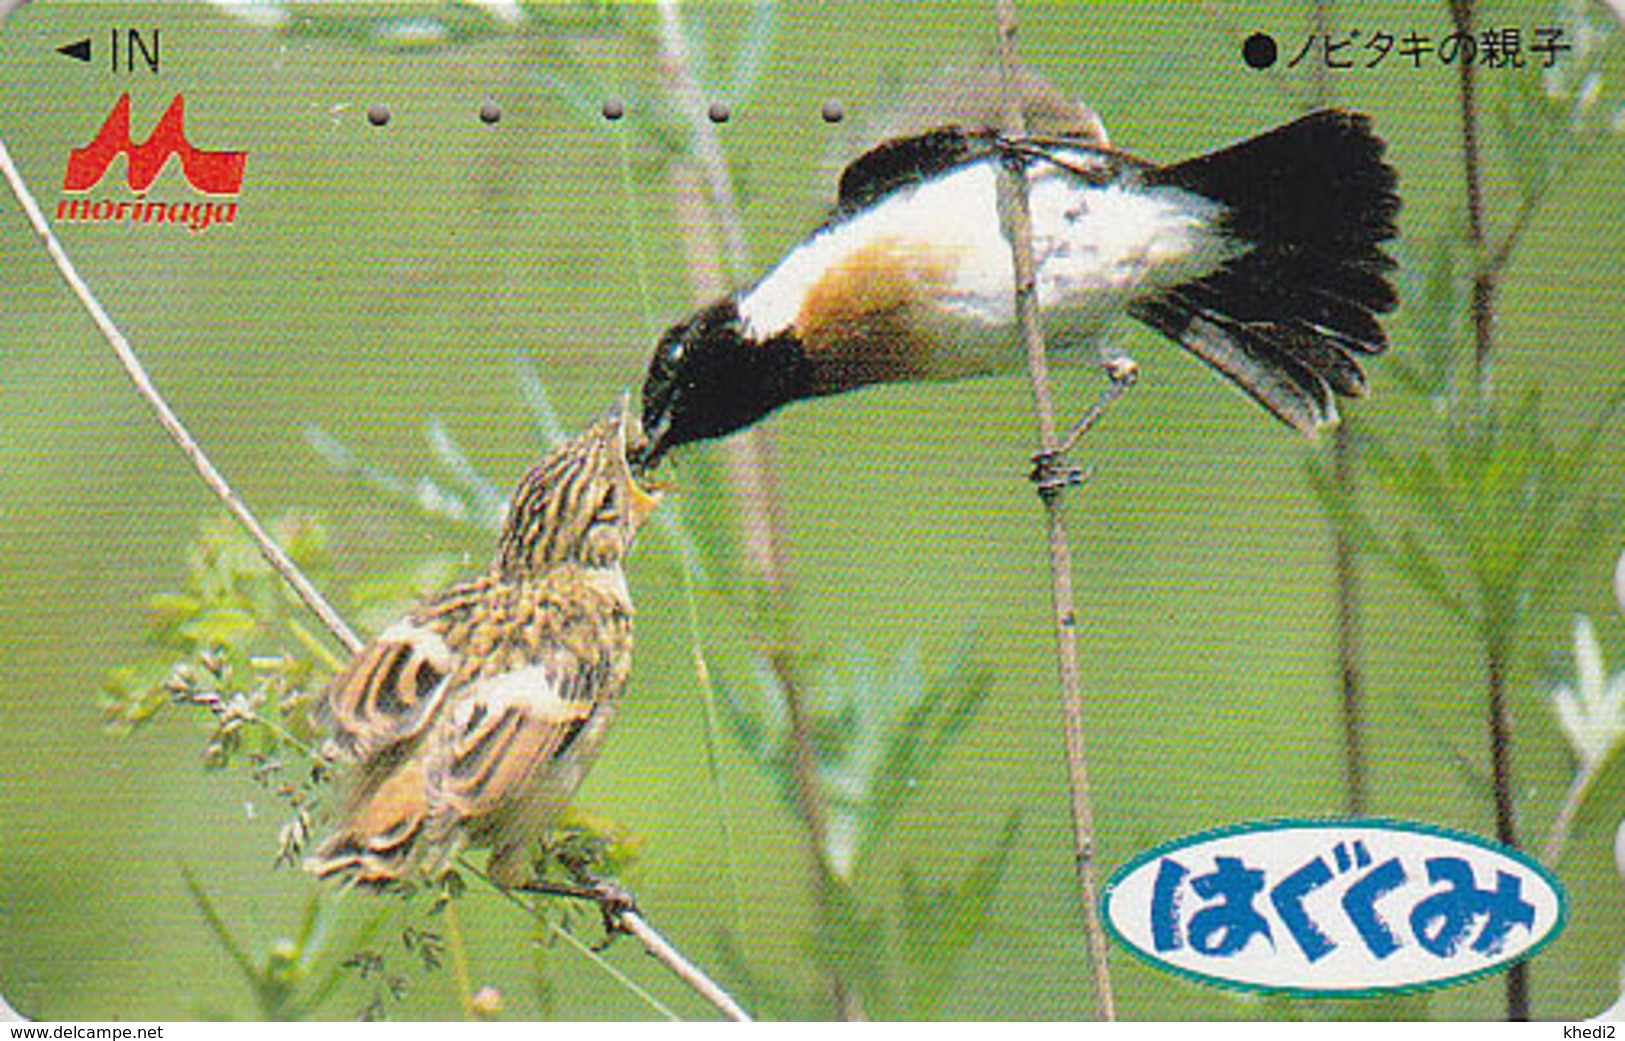 Télécarte Japon / 110-011 - Animal - OISEAU Au Nid - SONG BIRD Feeding Japan Phonecard - BE 4425 - Sperlingsvögel & Singvögel